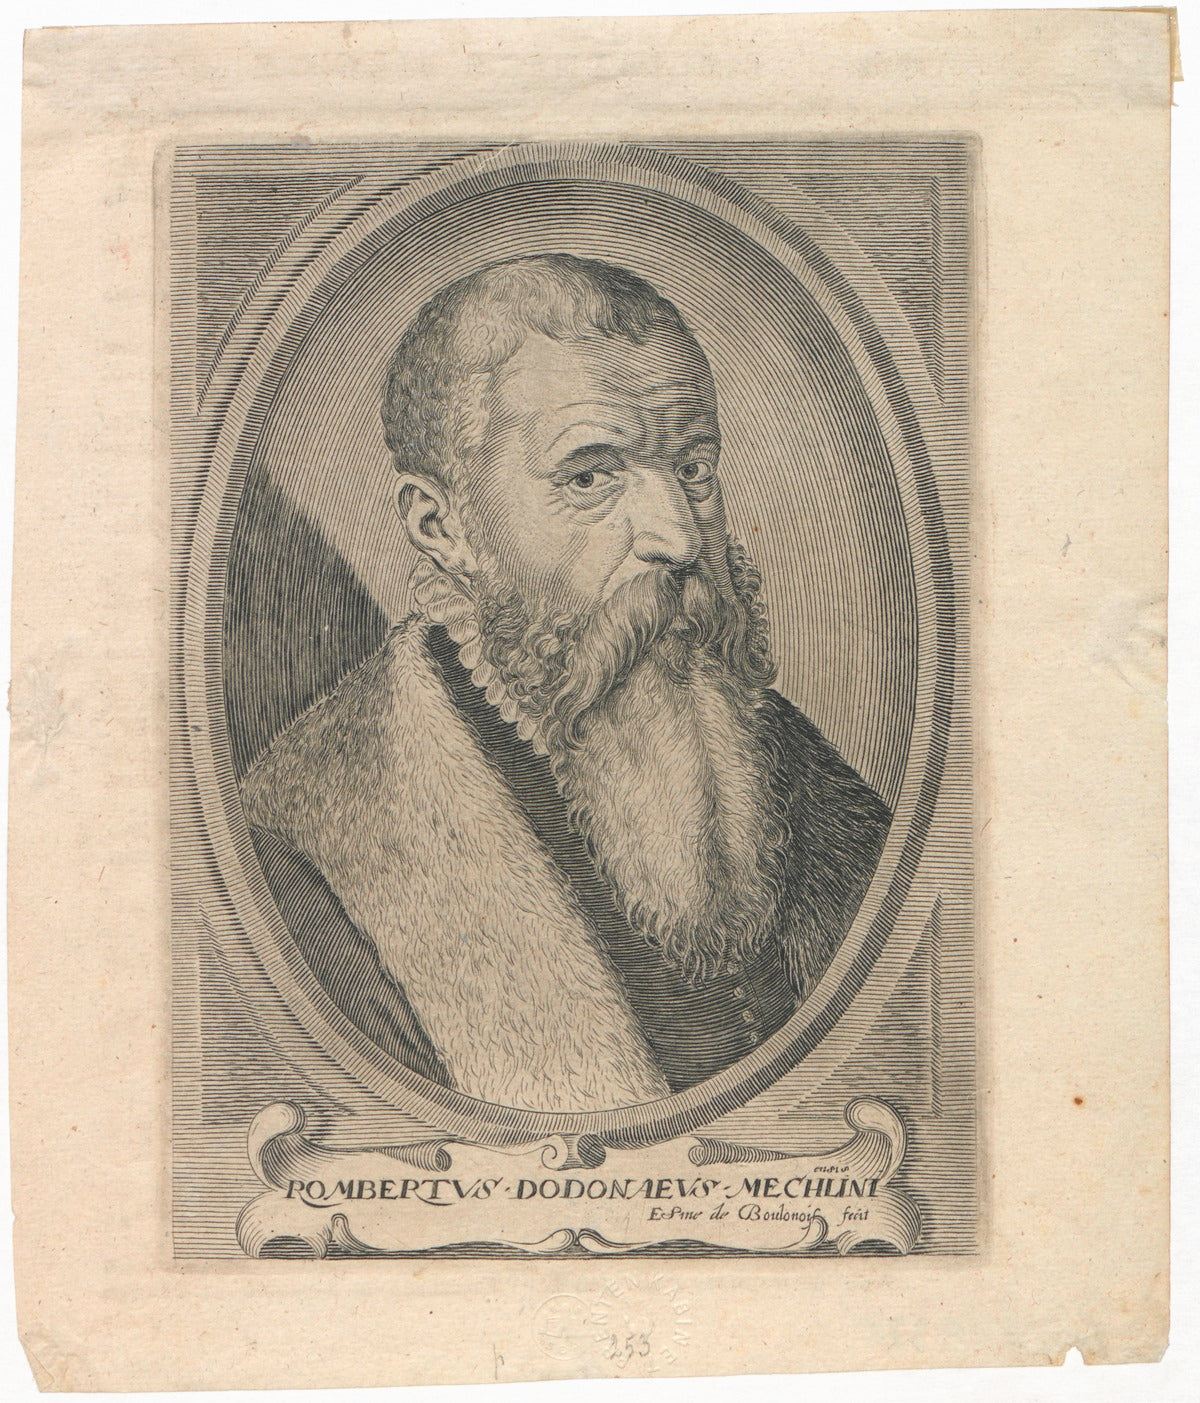 Emanuele Sweerts 17th Century "Florilegium" Print - Plate 55